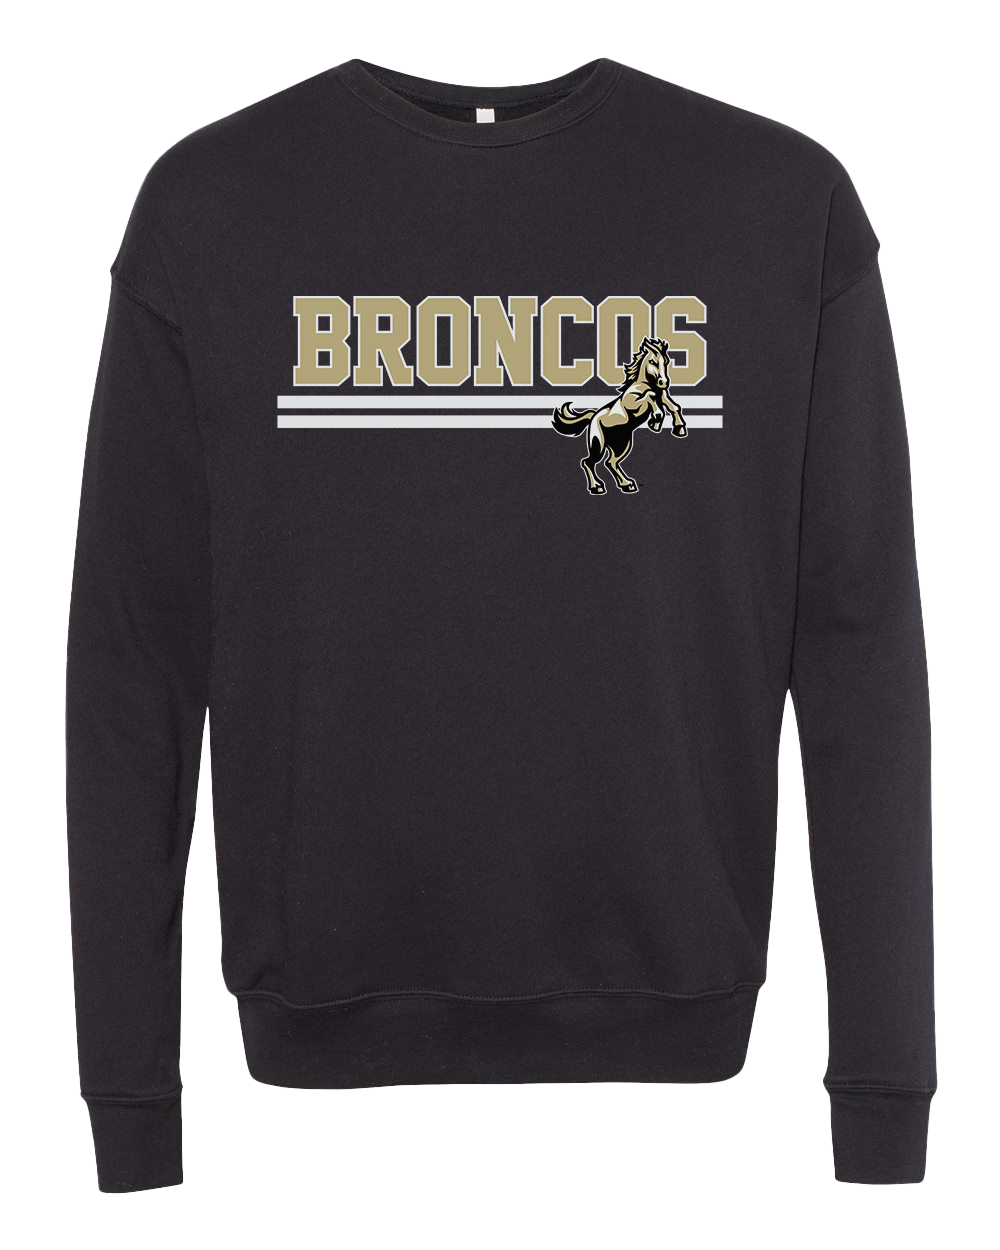 Daleville Broncos Retro Crew Sweatshirt - Black